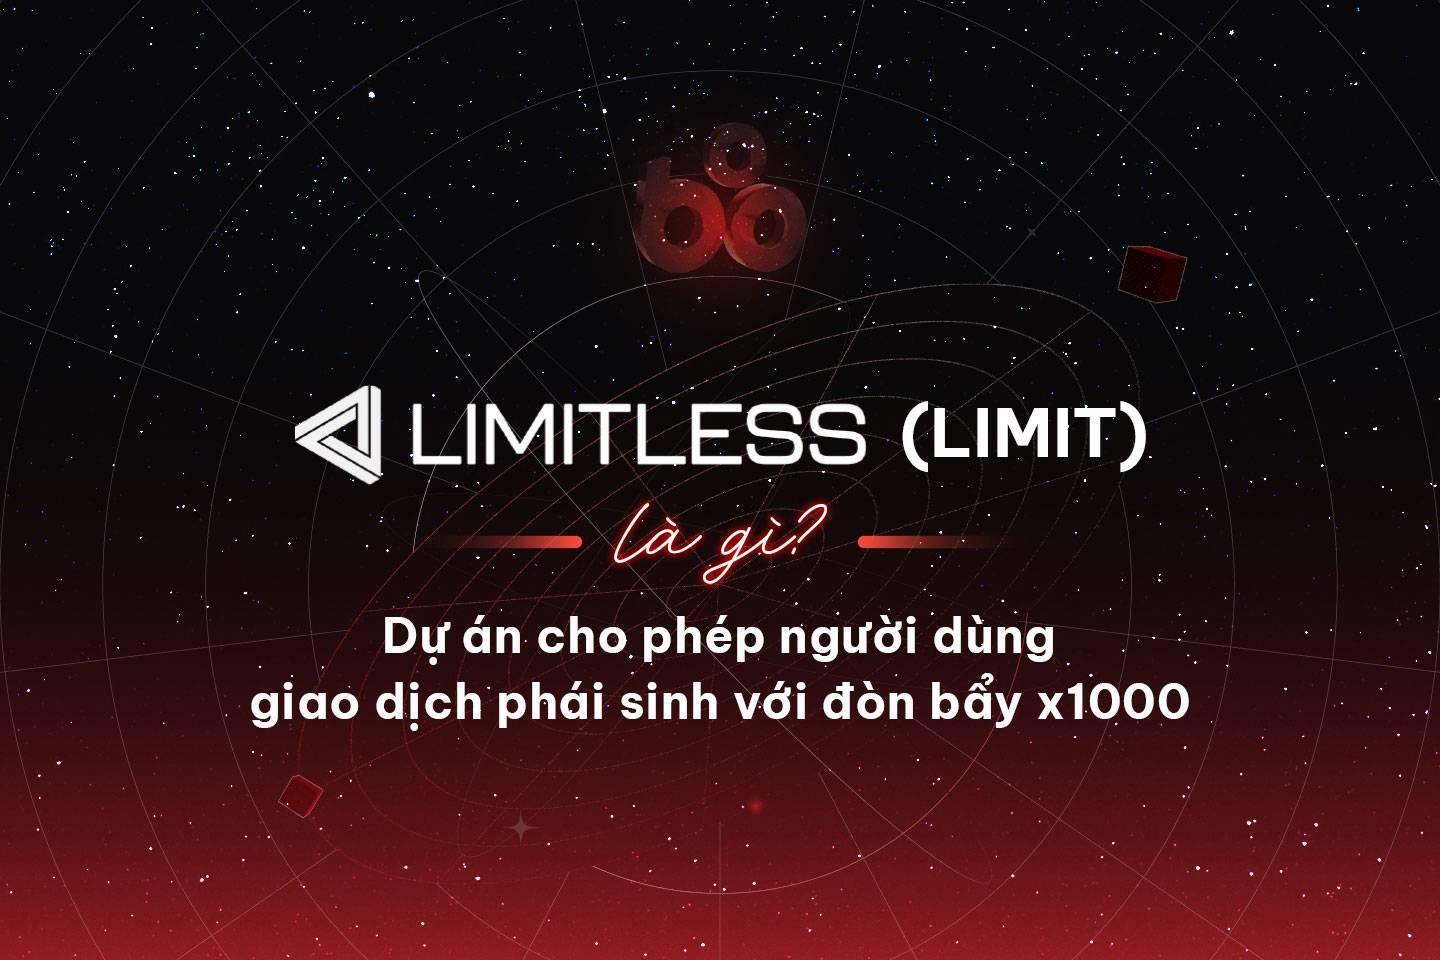 limitless-limit-la-gi-du-an-cho-phep-nguoi-dung-giao-dich-phai-sinh-voi-don-bay-x1000